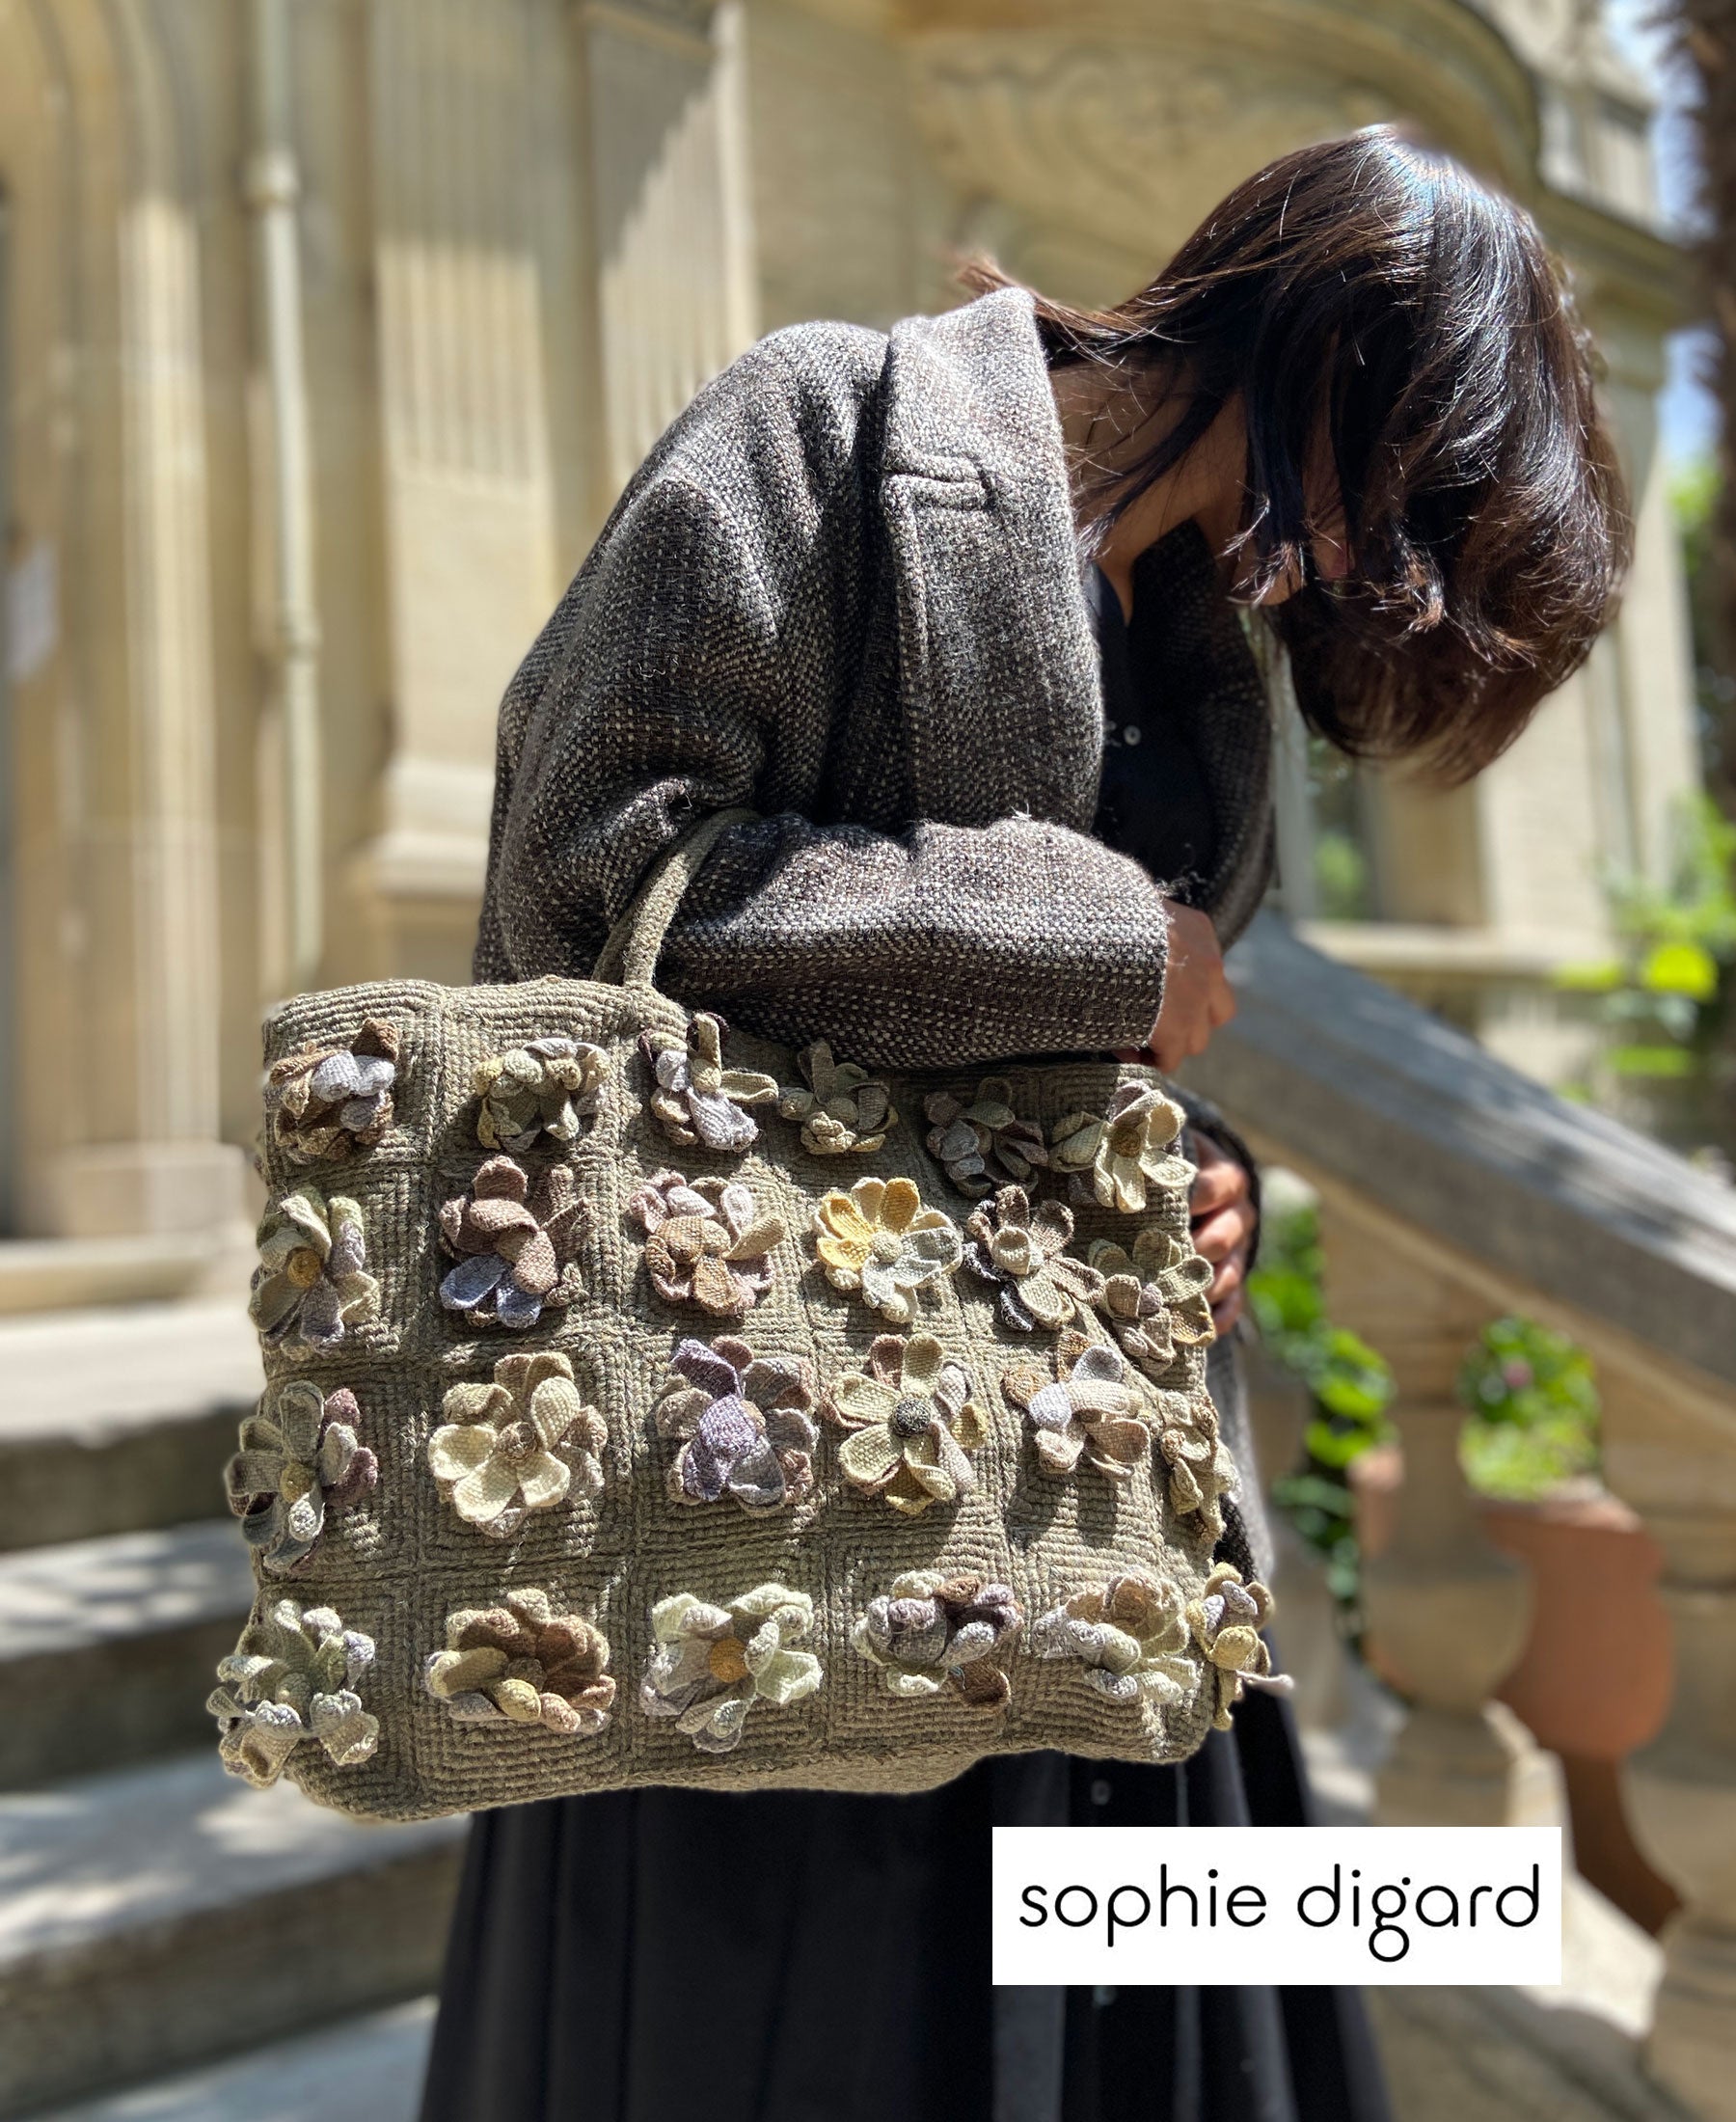 Sophie digard ソフィーディガール ラフィアのバッグ - かごバッグ